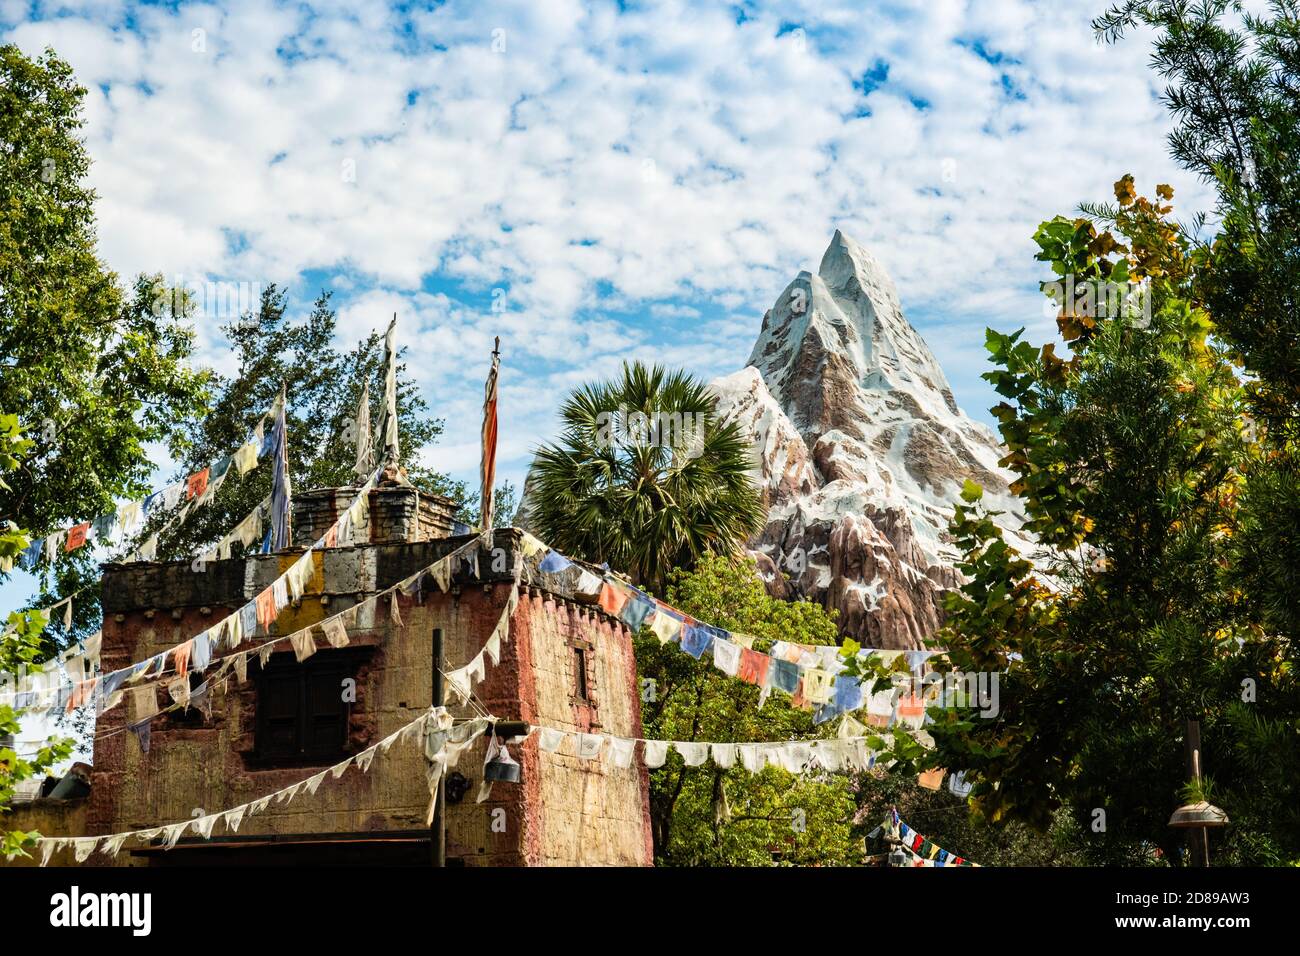 The peak of Expedition Everest - Legend of the Forbidden Mountain, Disney's Animal Kindom Theme Park, Florida Stock Photo